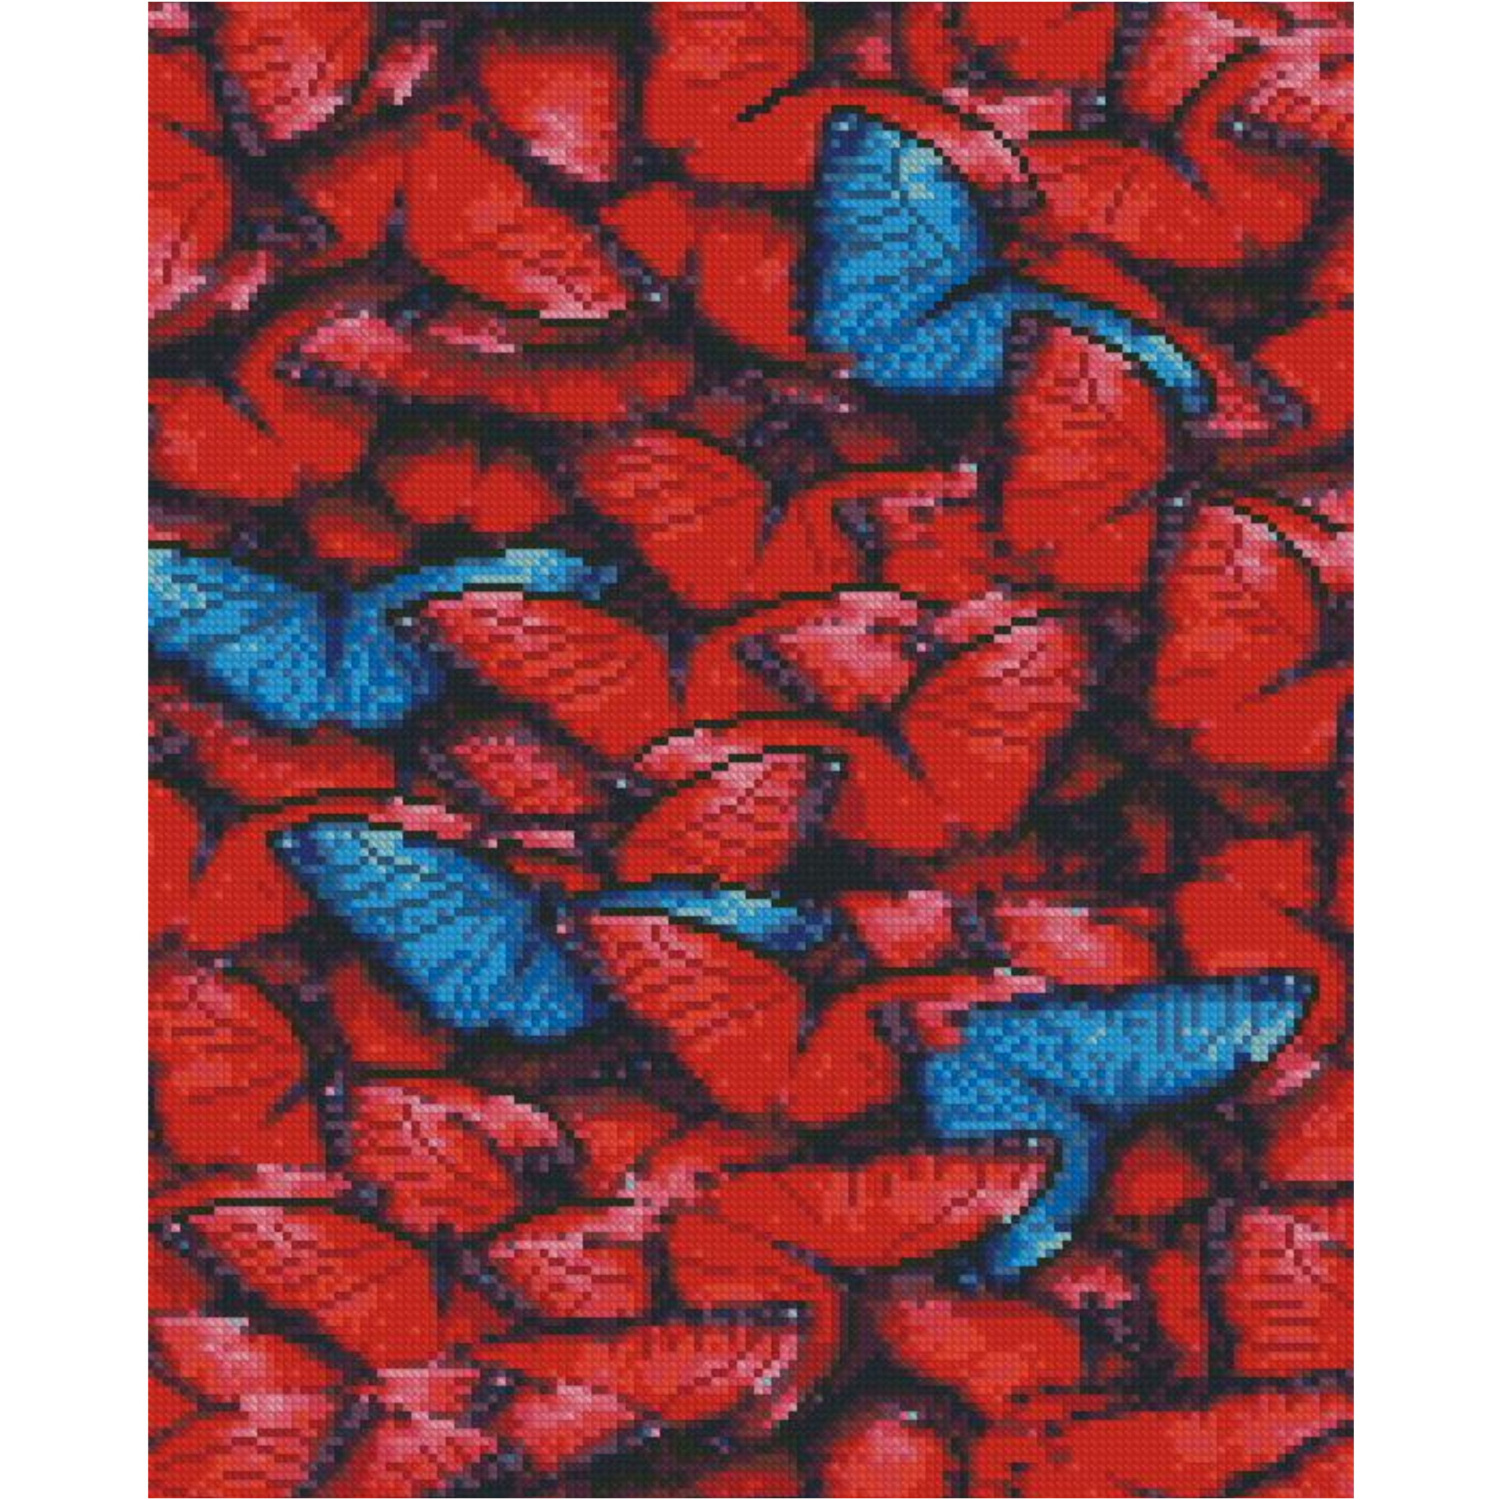 Diamond mosaic Strateg PREMIUM Червоні метелики size 40x50 cm FA40878